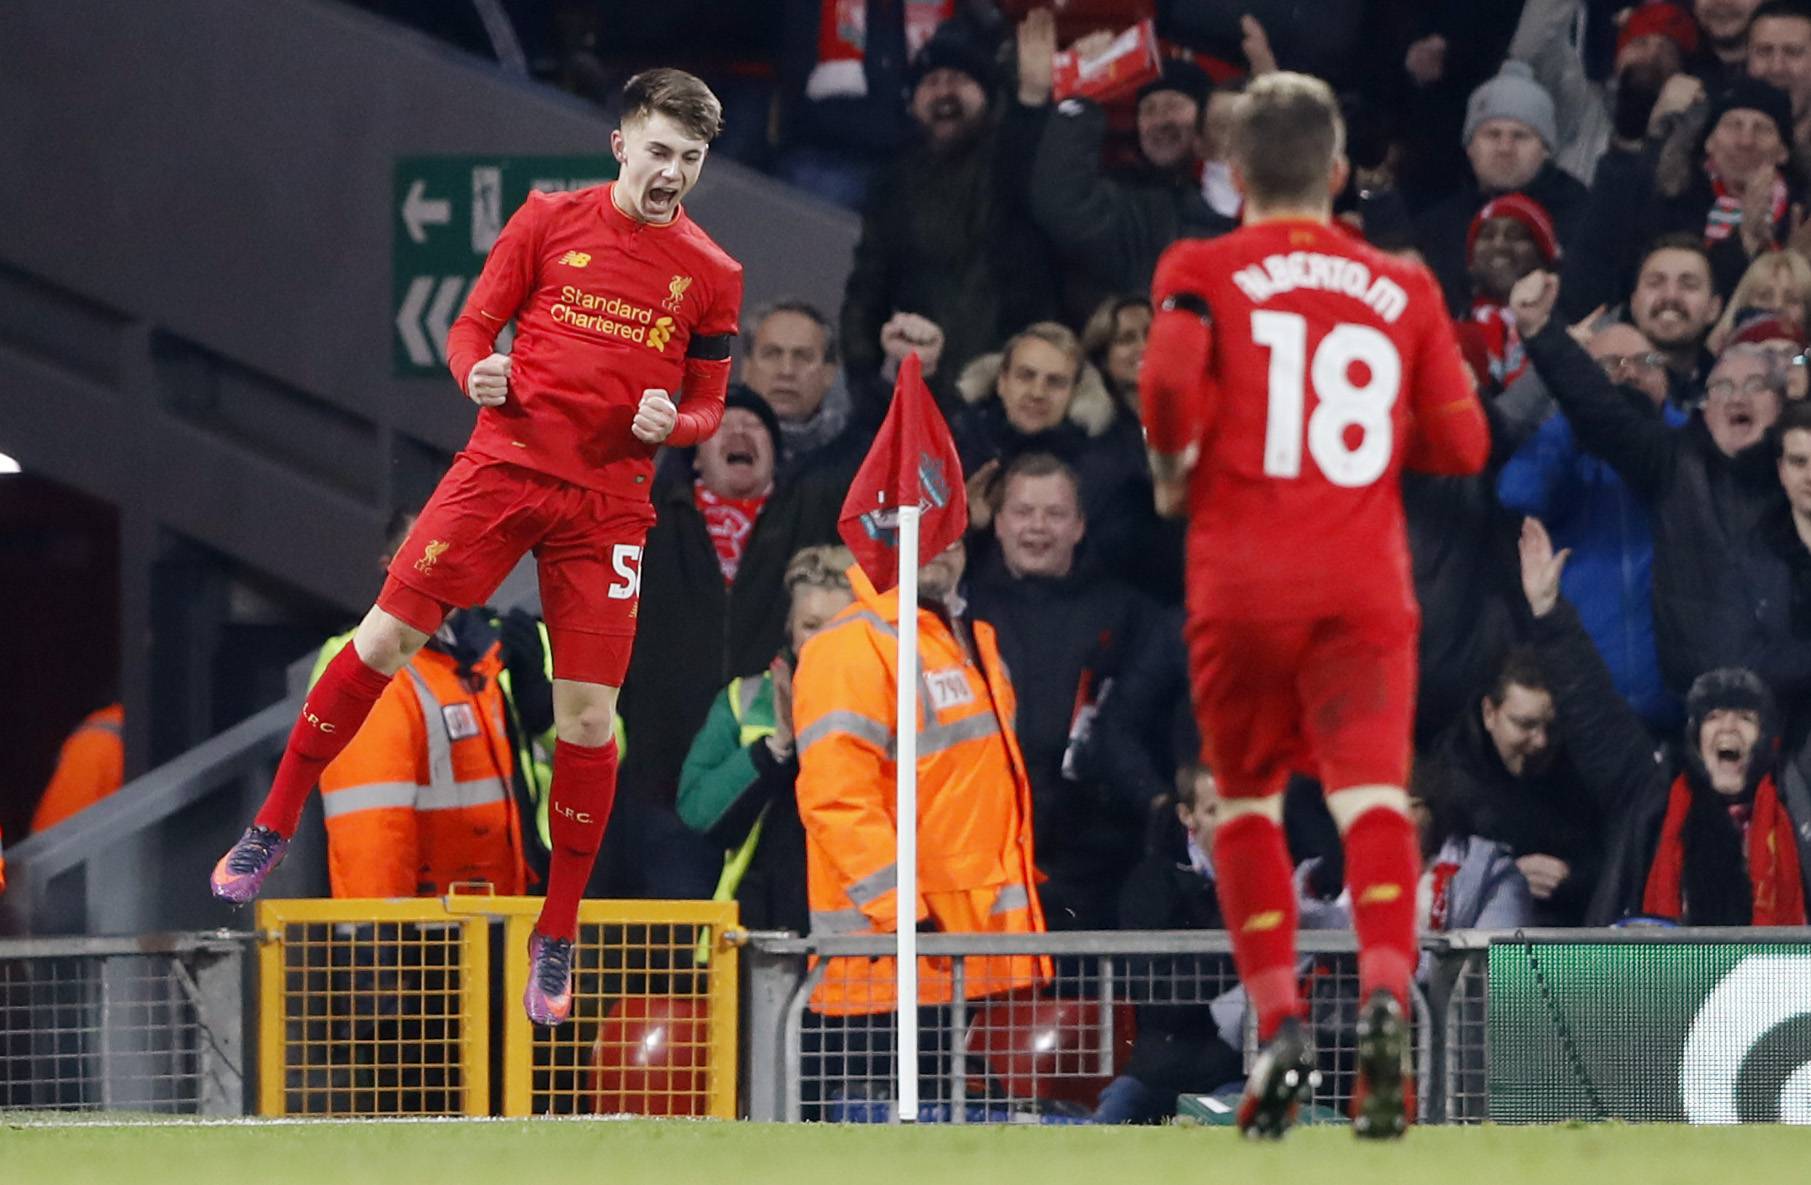 Liverpool's Ben Woodburn celebrates scoring their second goal